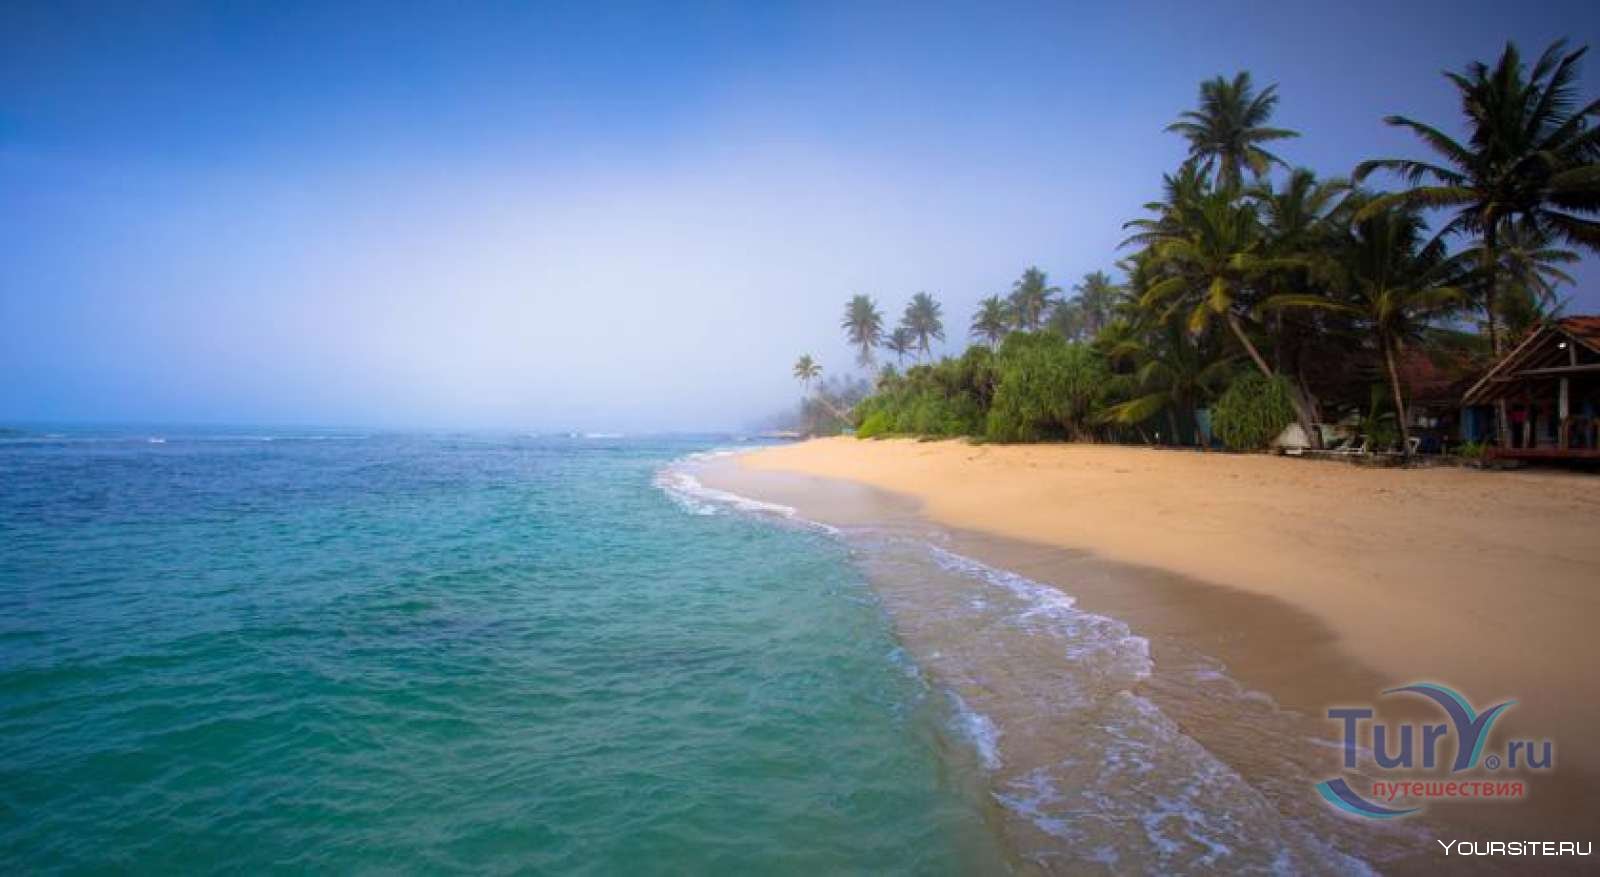 The beach шри ланка. Mirissa Beach Шри Ланка. Полхена Бич Шри Ланка. Пляж Мирисса Шри Ланка. Пляж Полхена Шри Ланка.